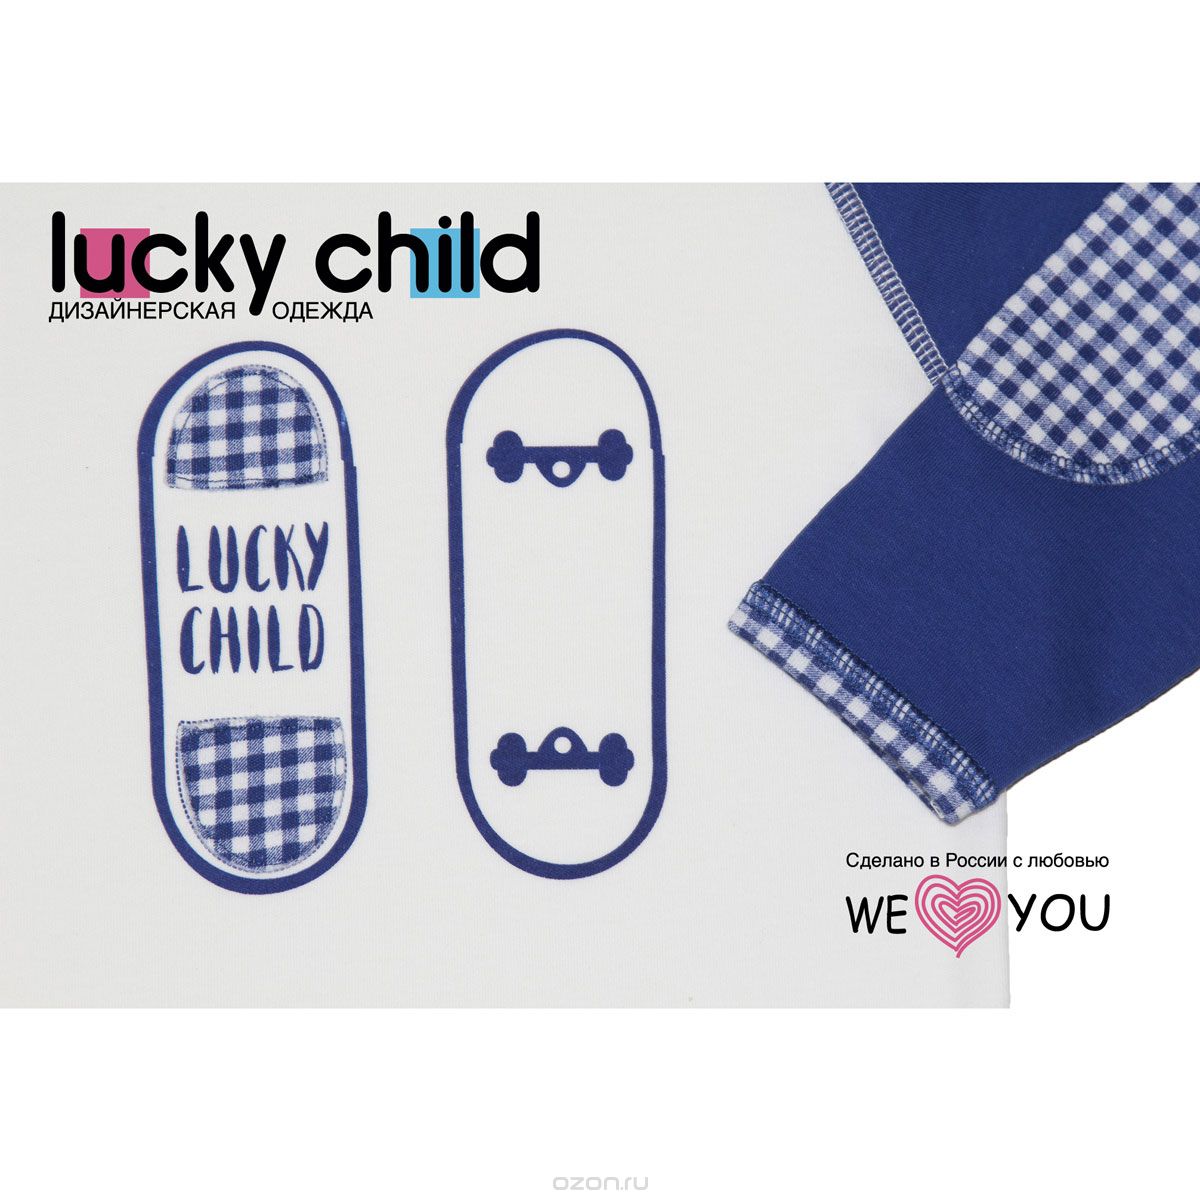    Lucky Child: , , : , . 13-411.  116/122